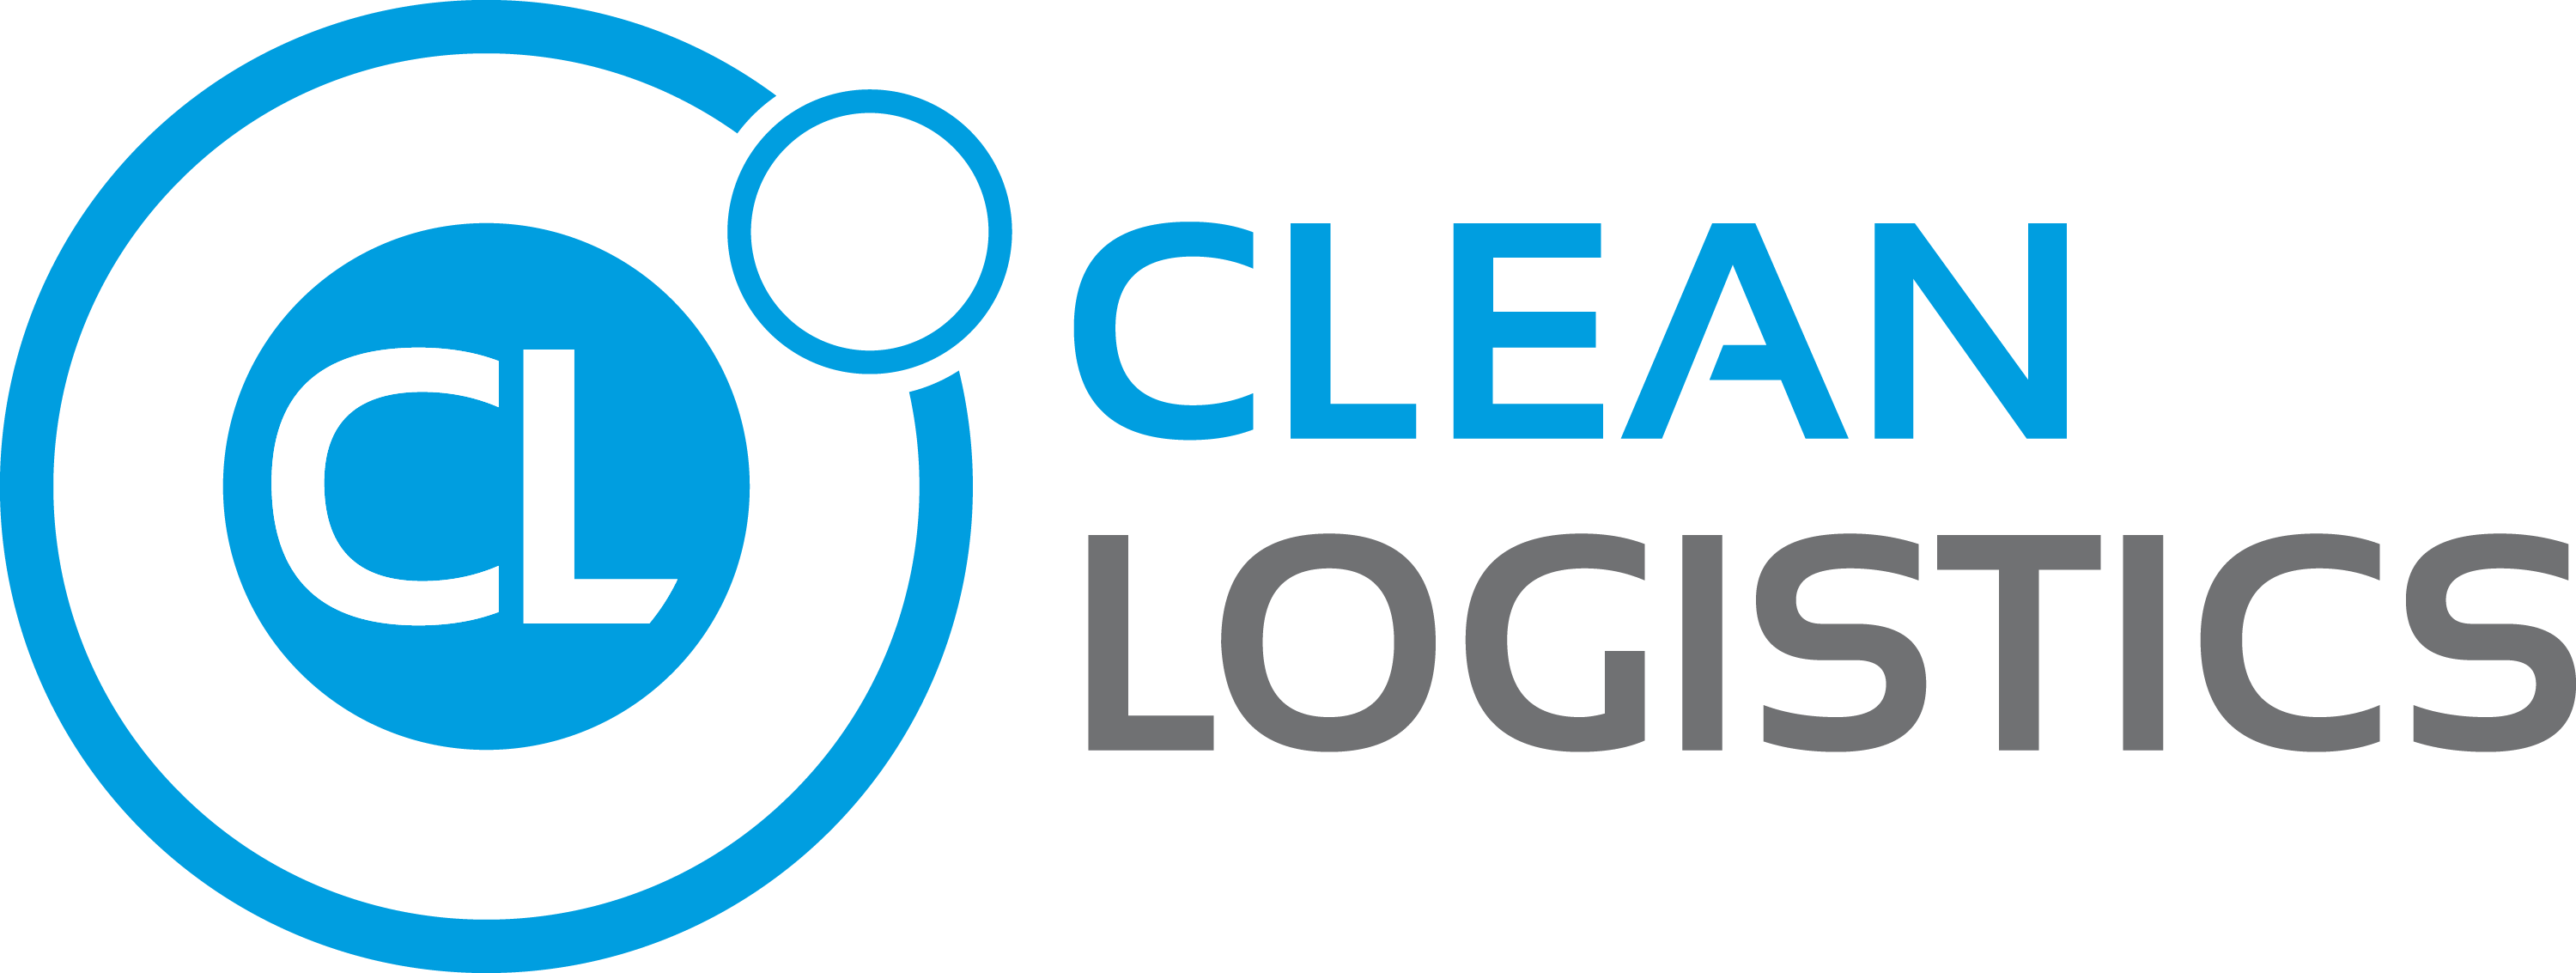 Clean Logistics